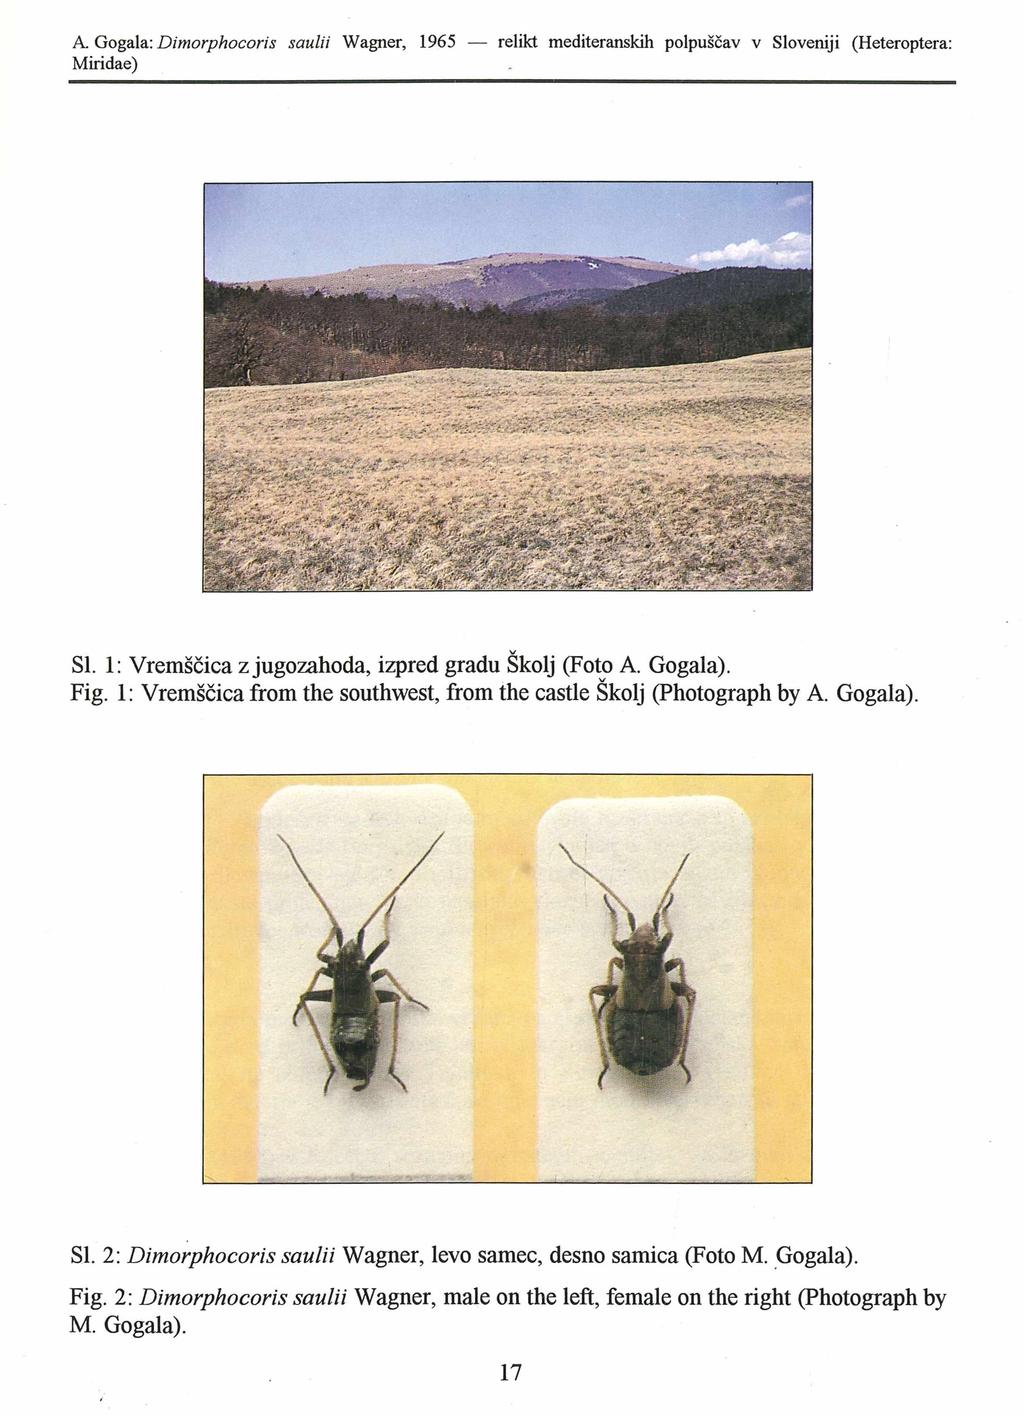 A. Gogala: Dimorphocoris saulii Slovenian Wagner, Entomological 1965 Society, relikt download mediteranskih unter www.biologiezentrum.at polpuščav v Sloveniji (Heteroptera: Miridae) Sl.